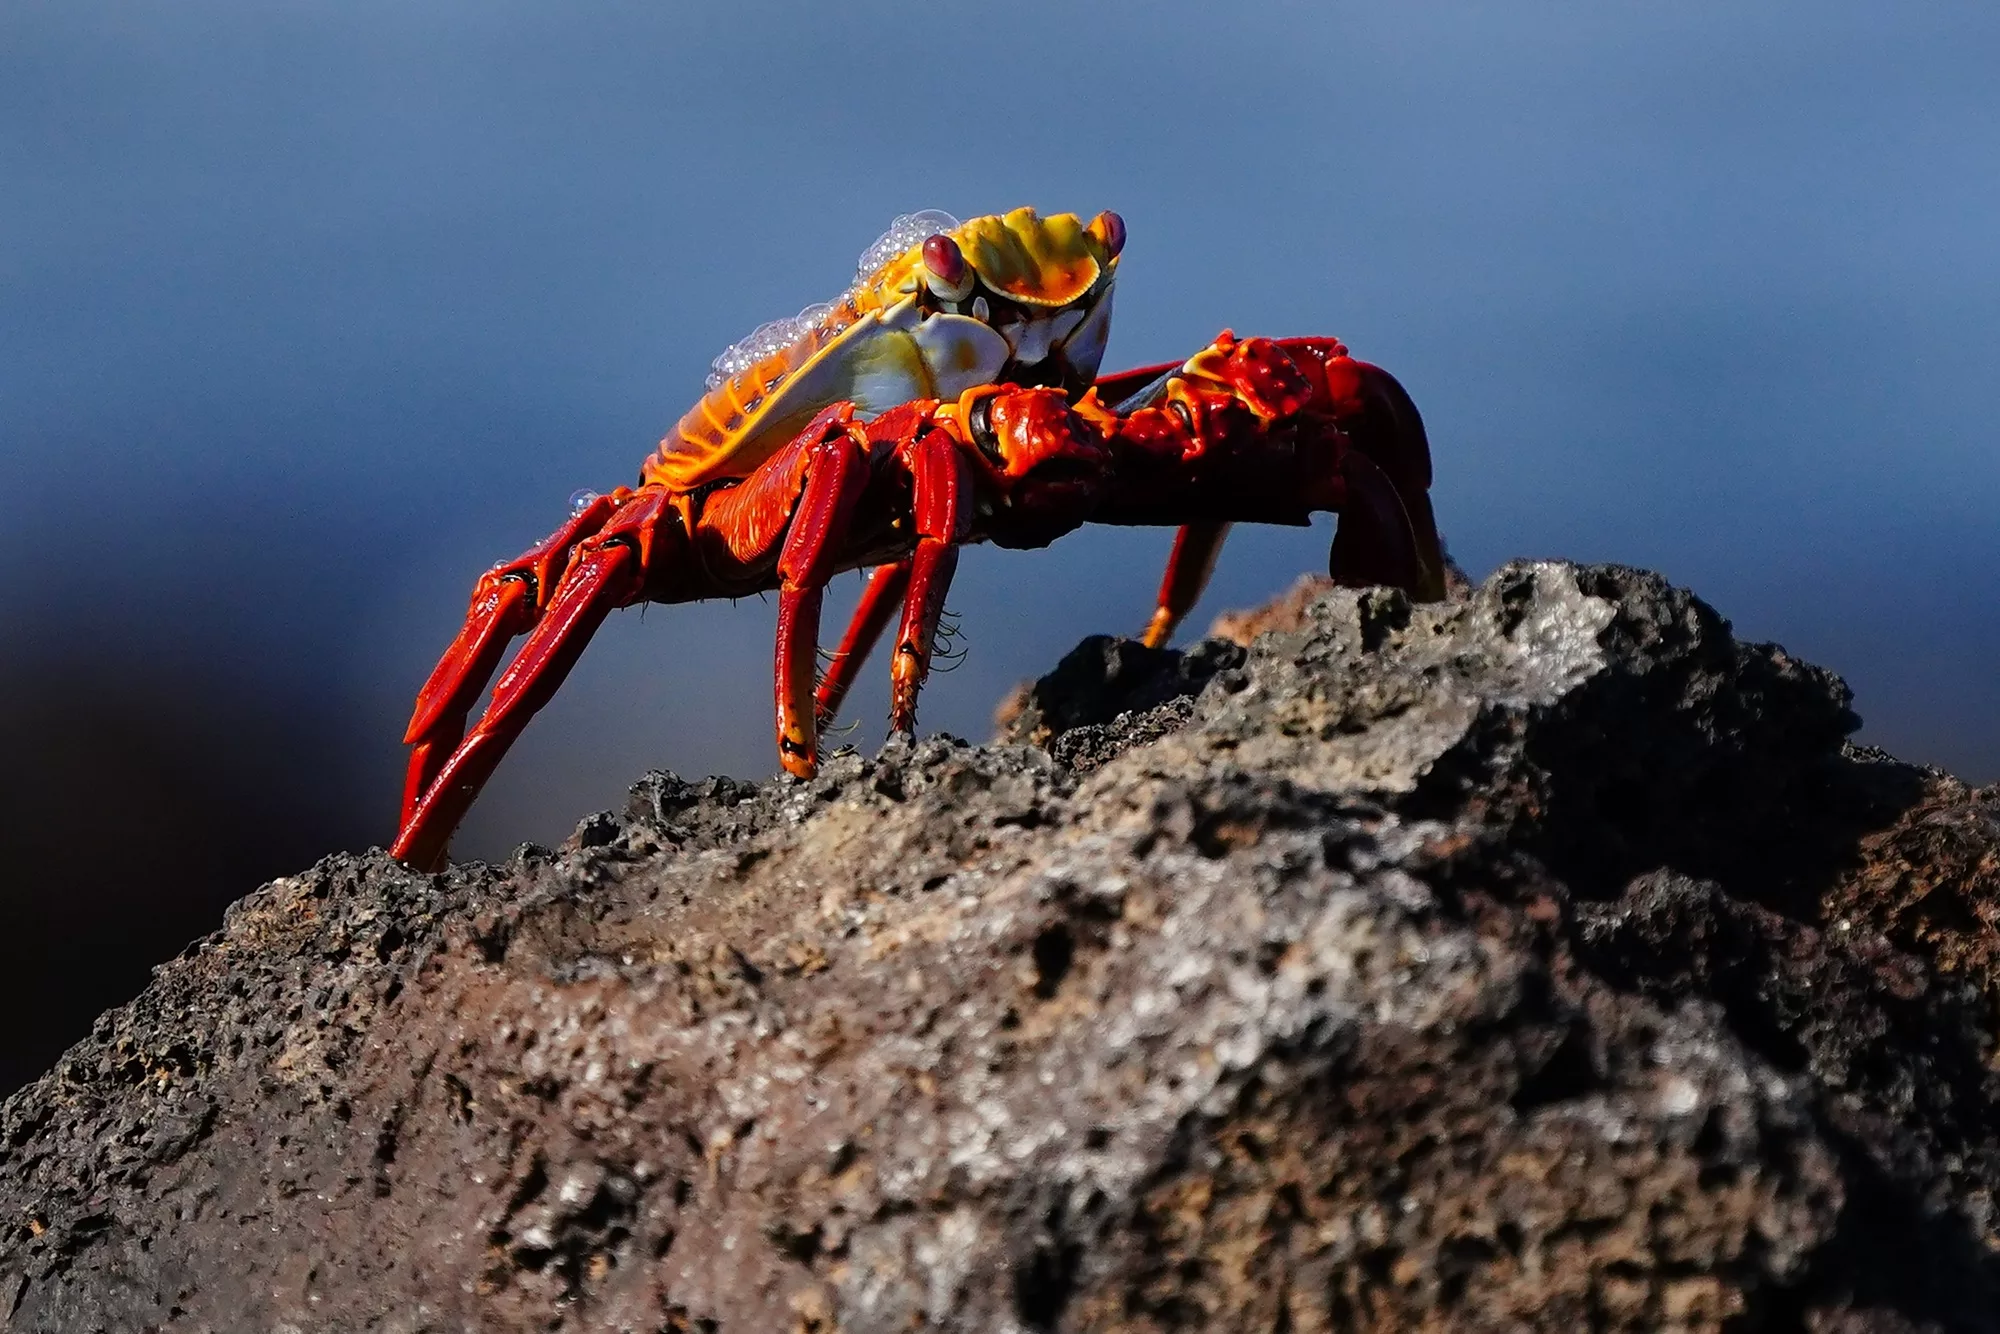 Galapagos Islands Yacht-Based Tour Sally-lightfoot crab